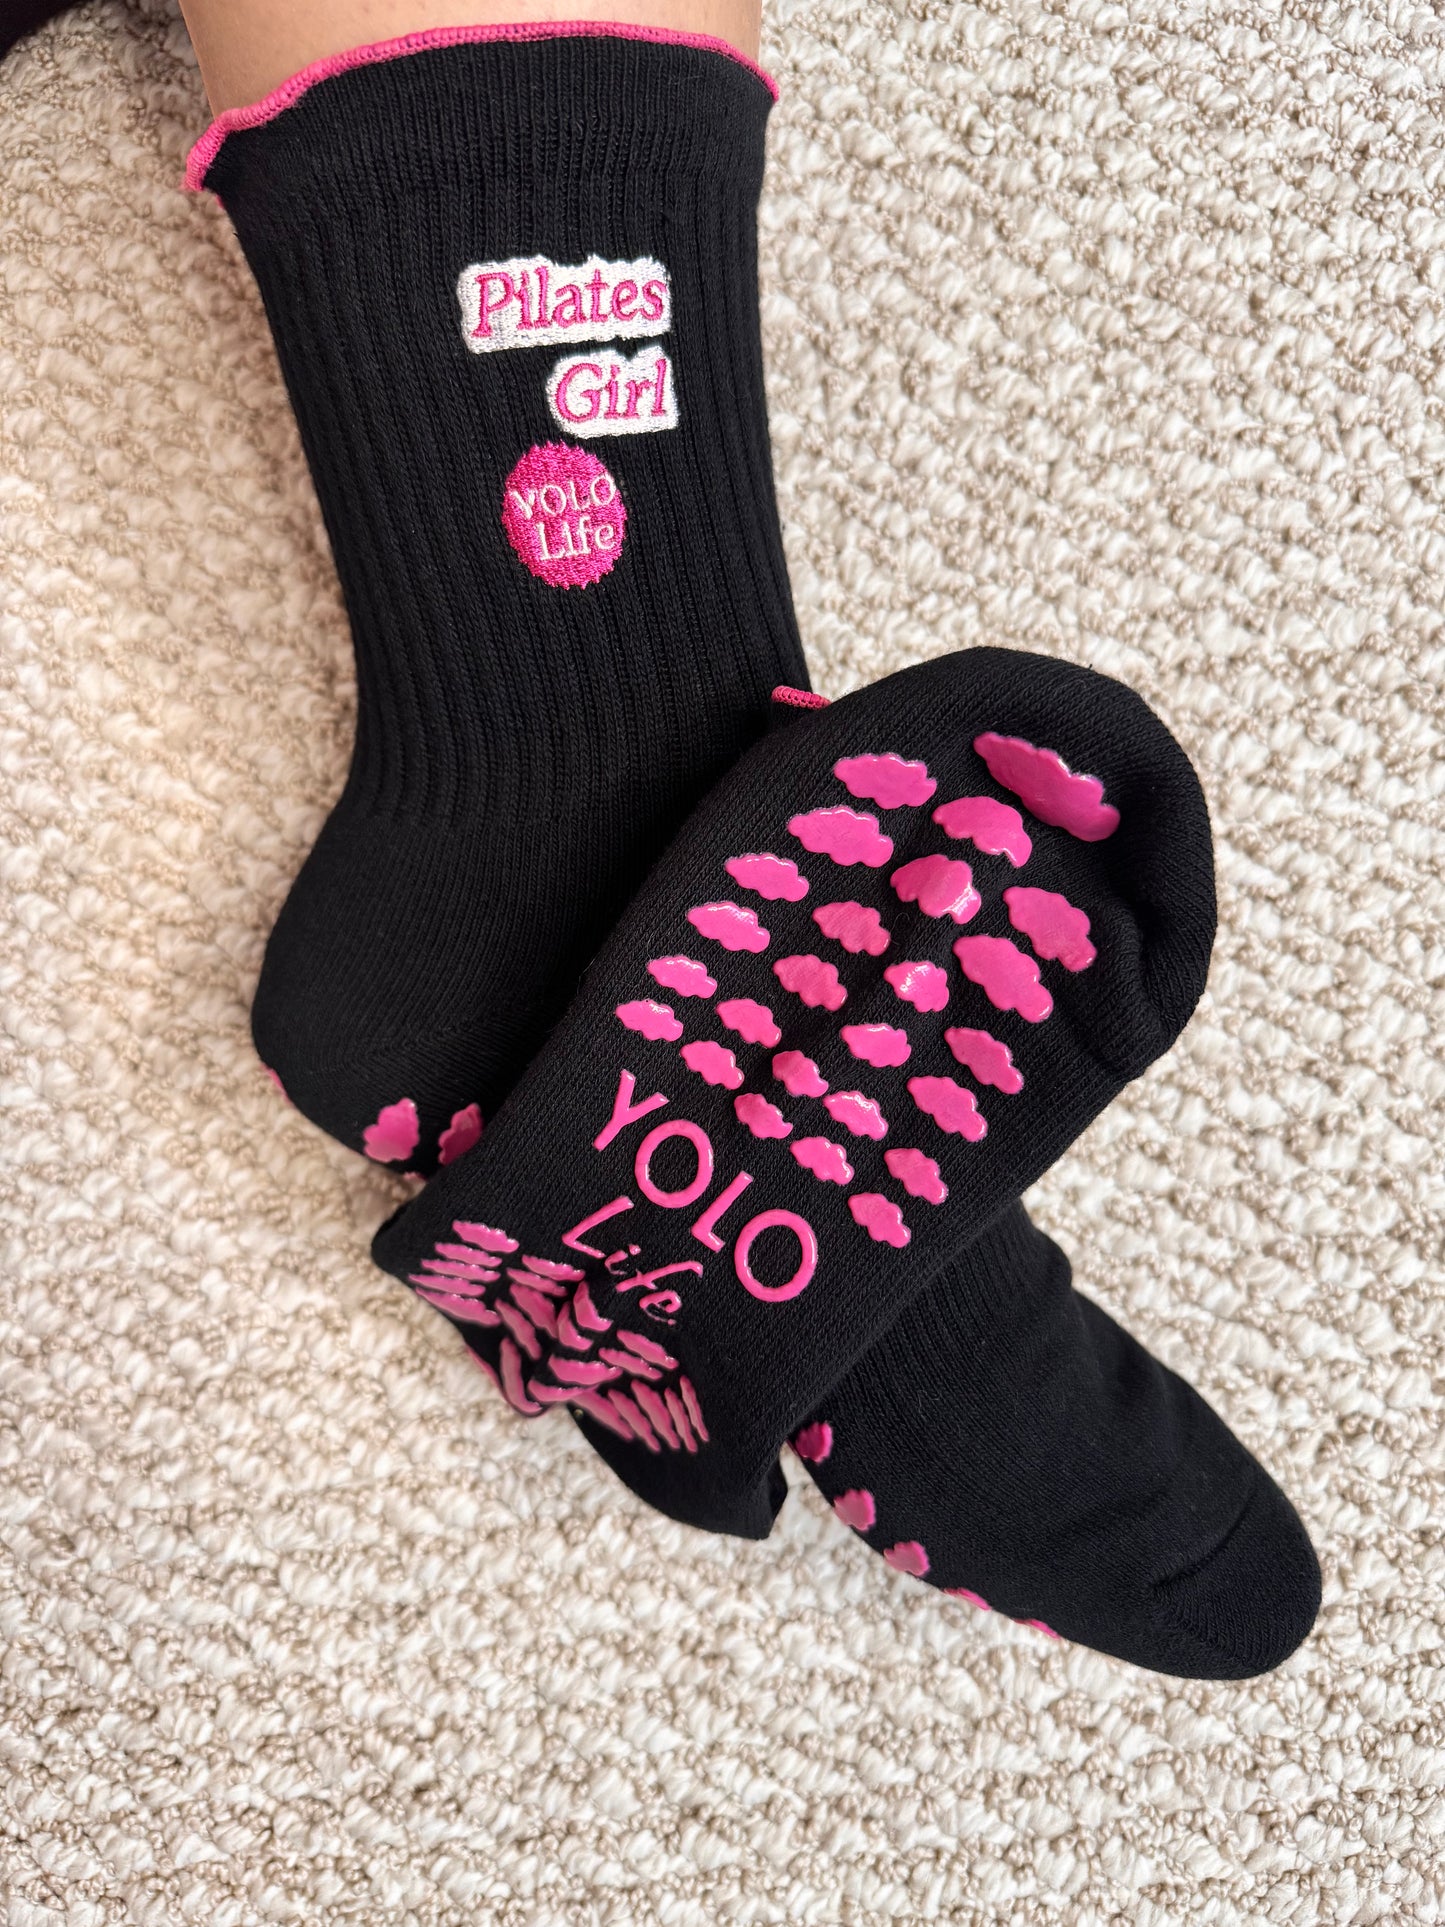 "Pilates Girl" crew grip socks